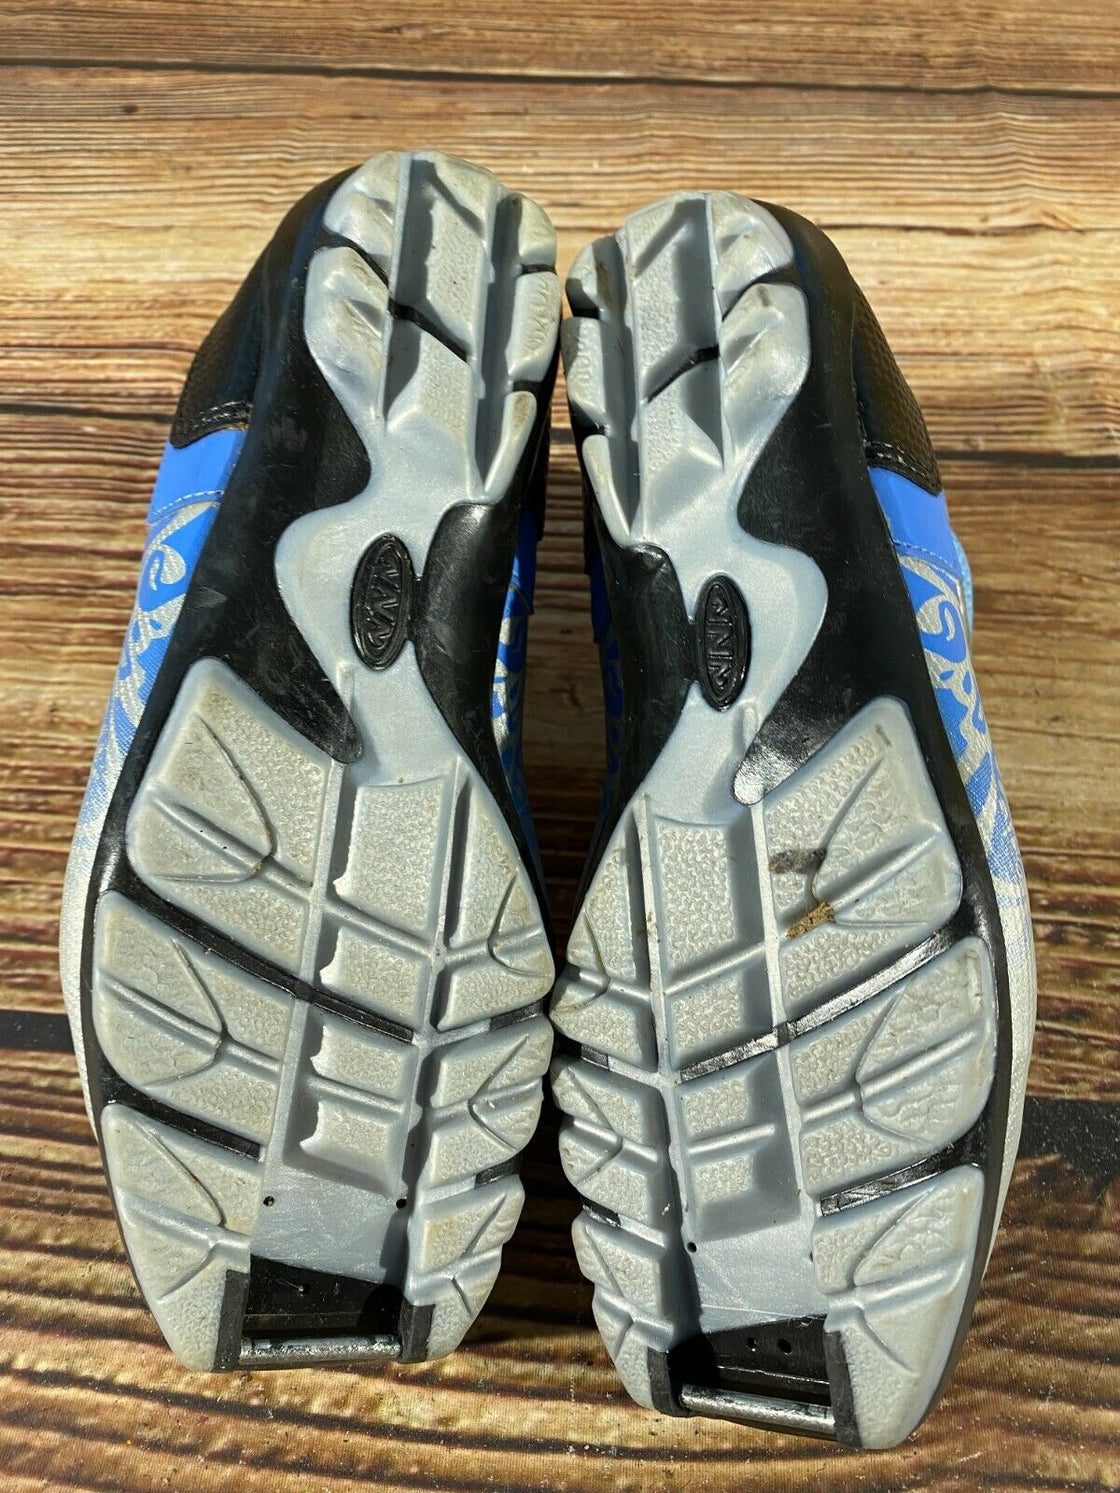 Madshus NX6 Cross Country Ski Boots Size EU37 US5.5 for NNN